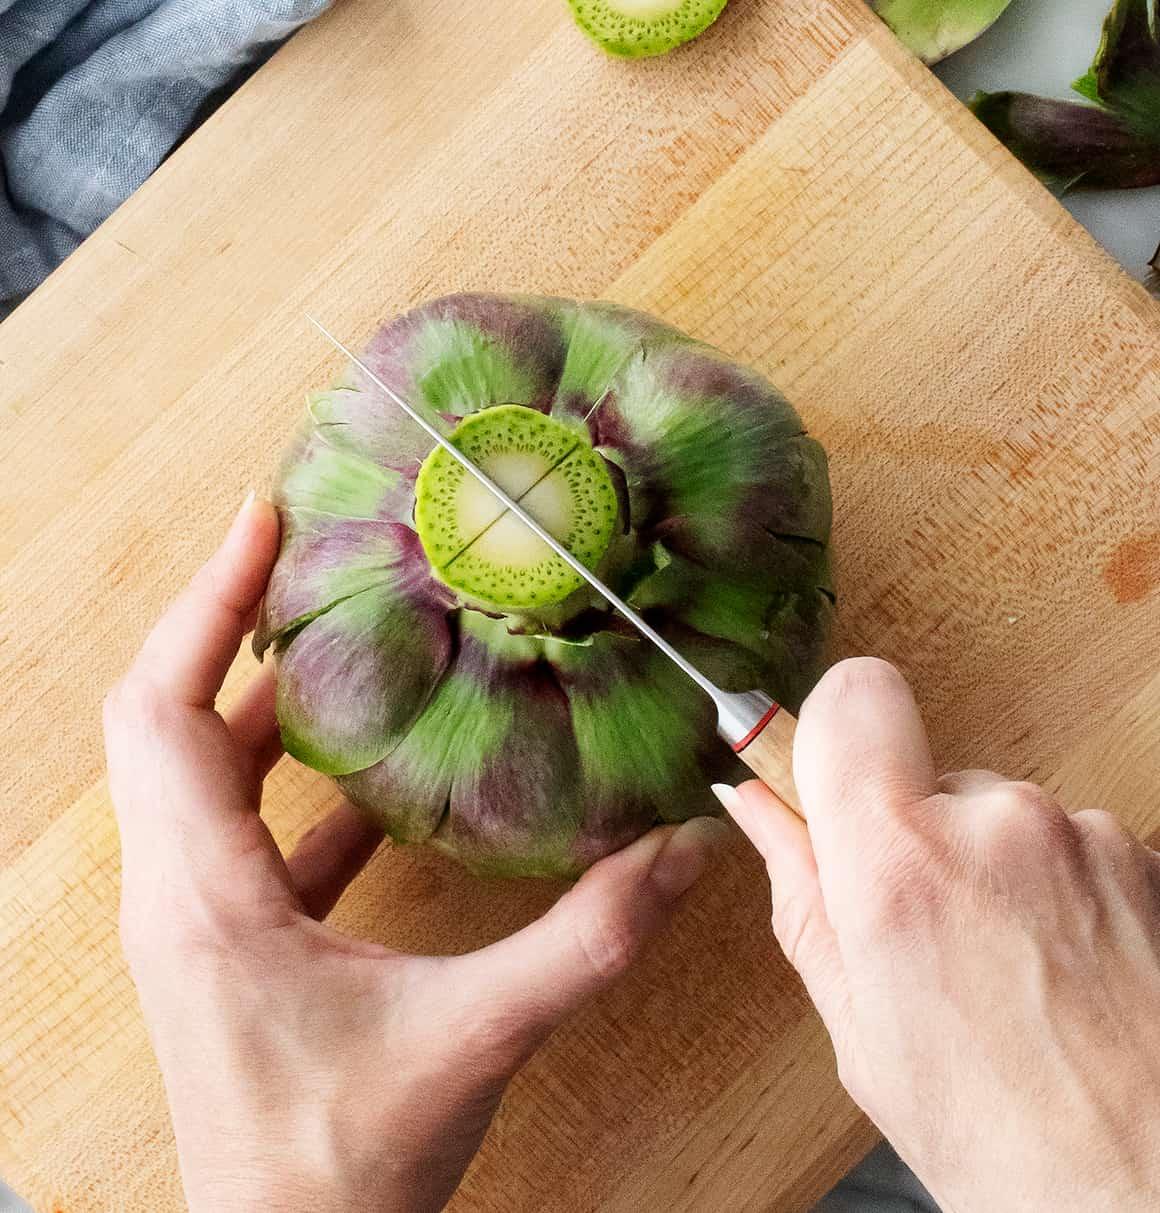 Hands scoring artichoke stem with a knife